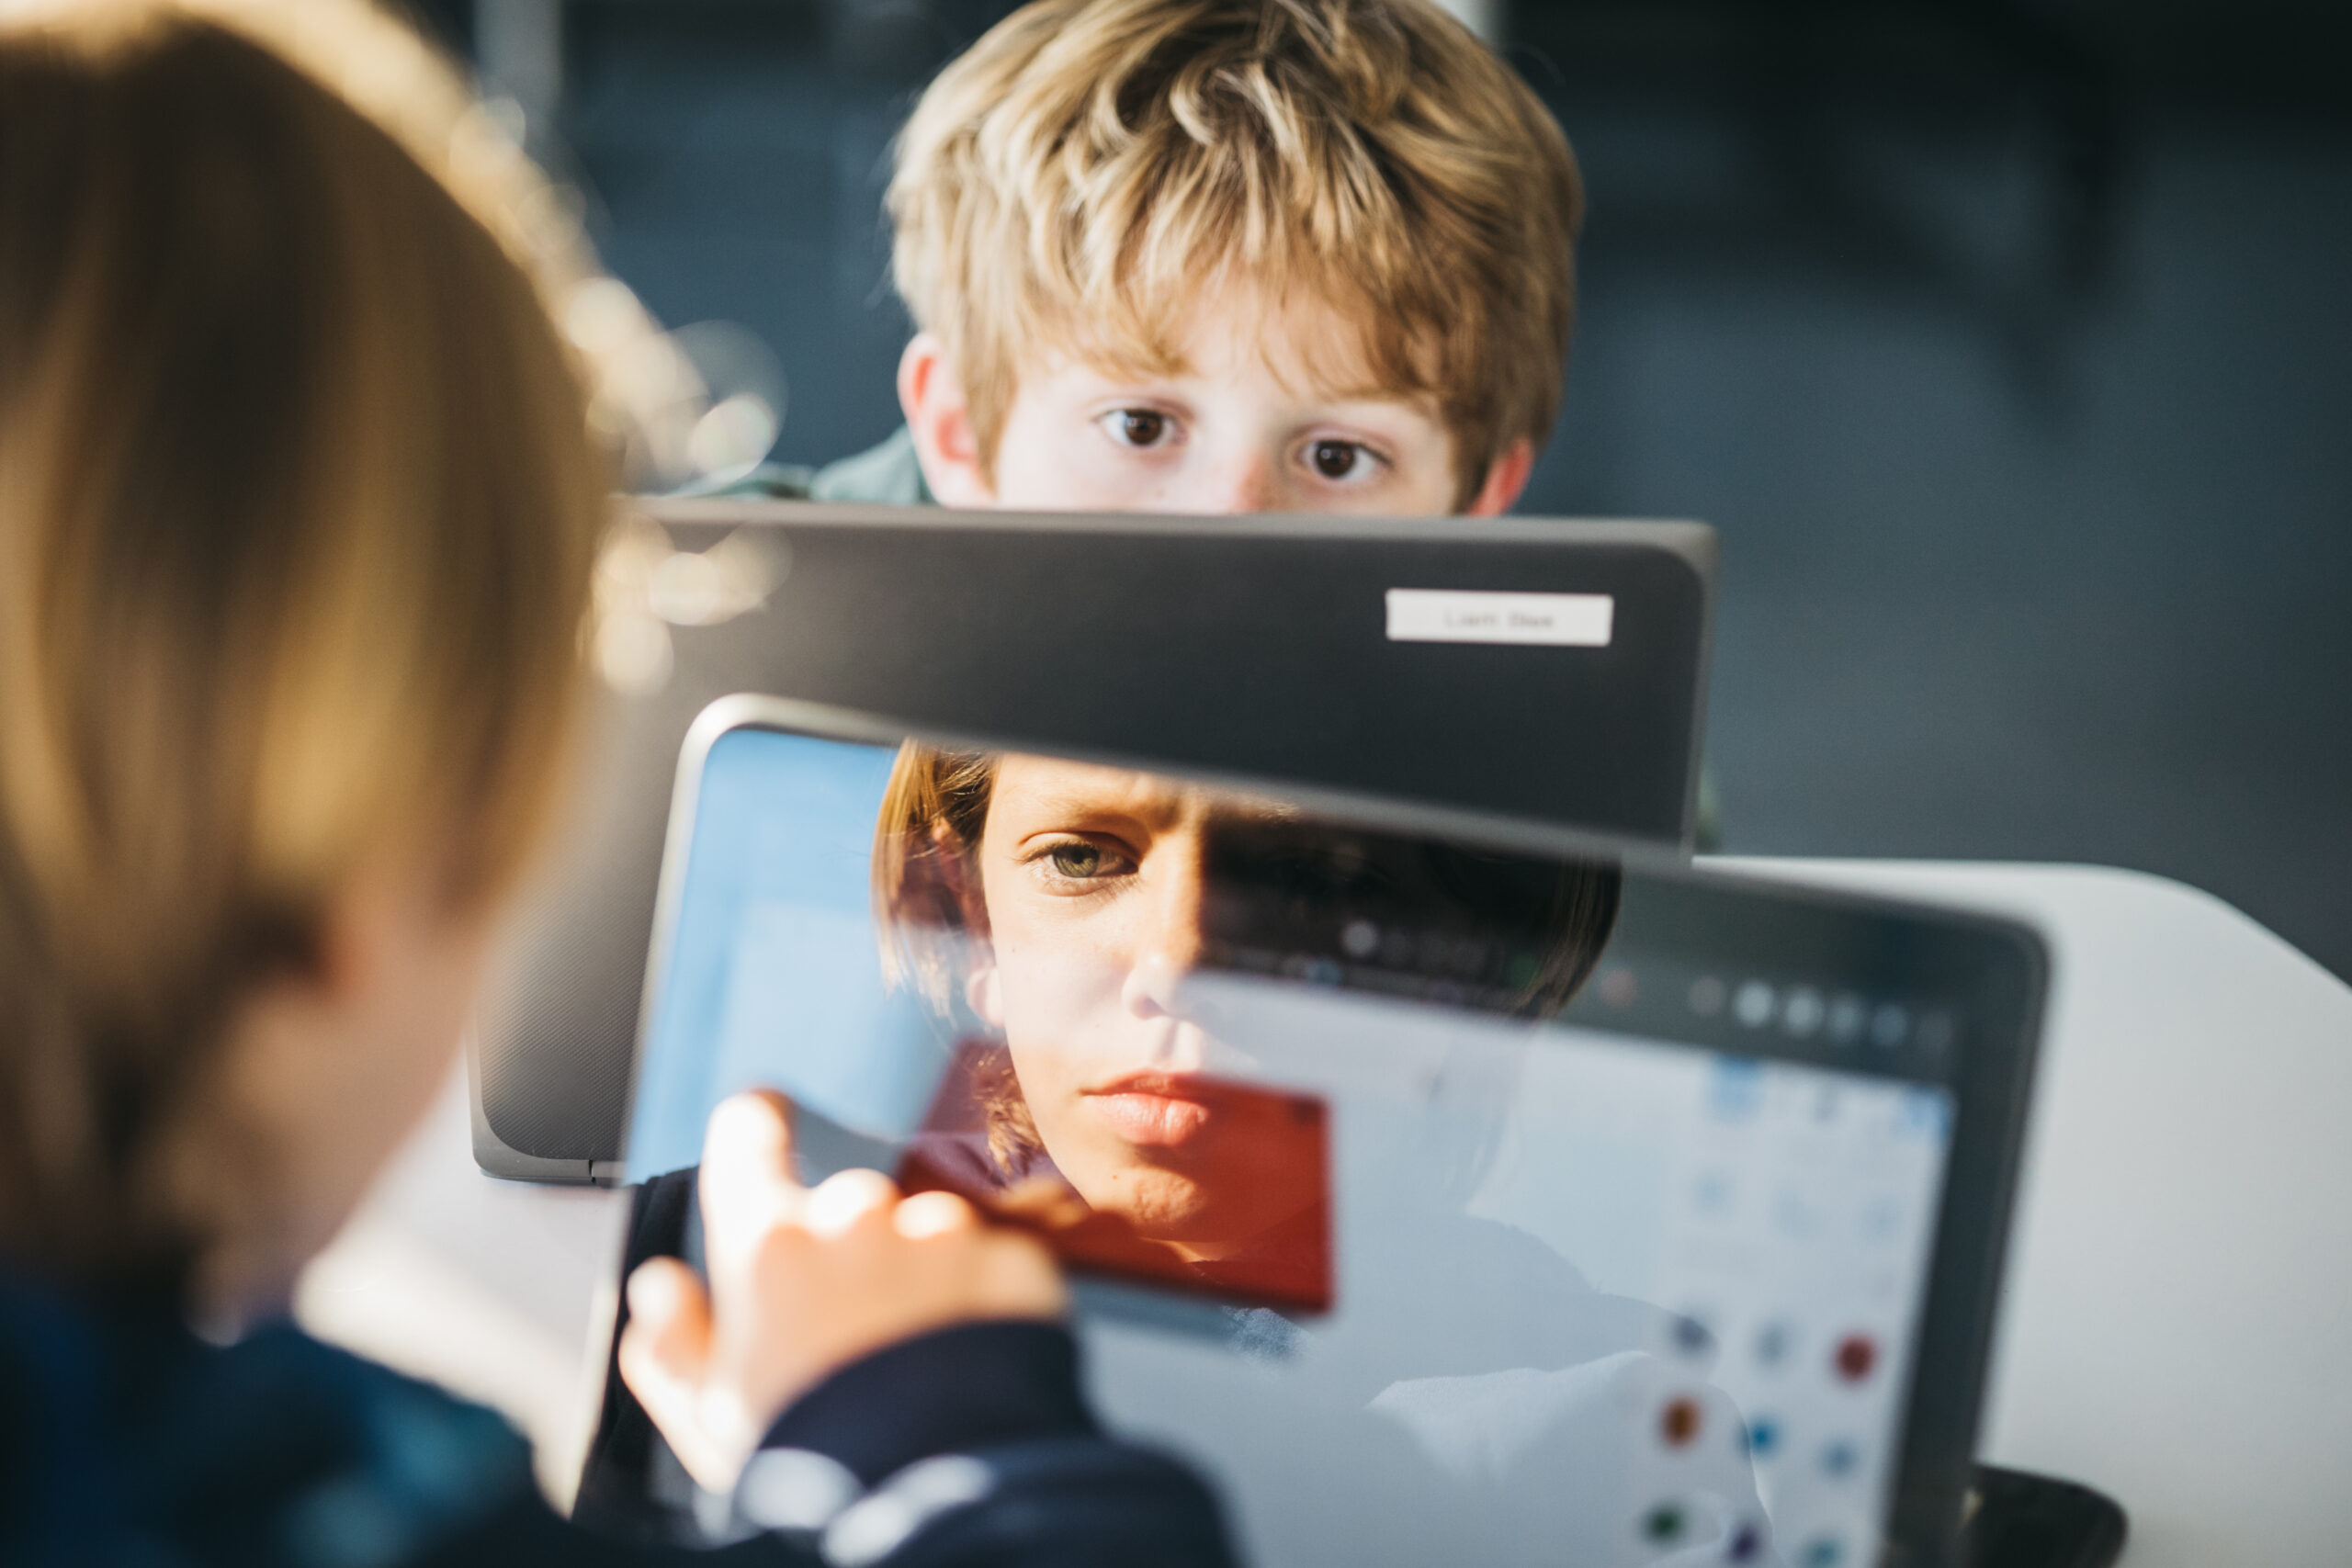 children on touchscreen computers